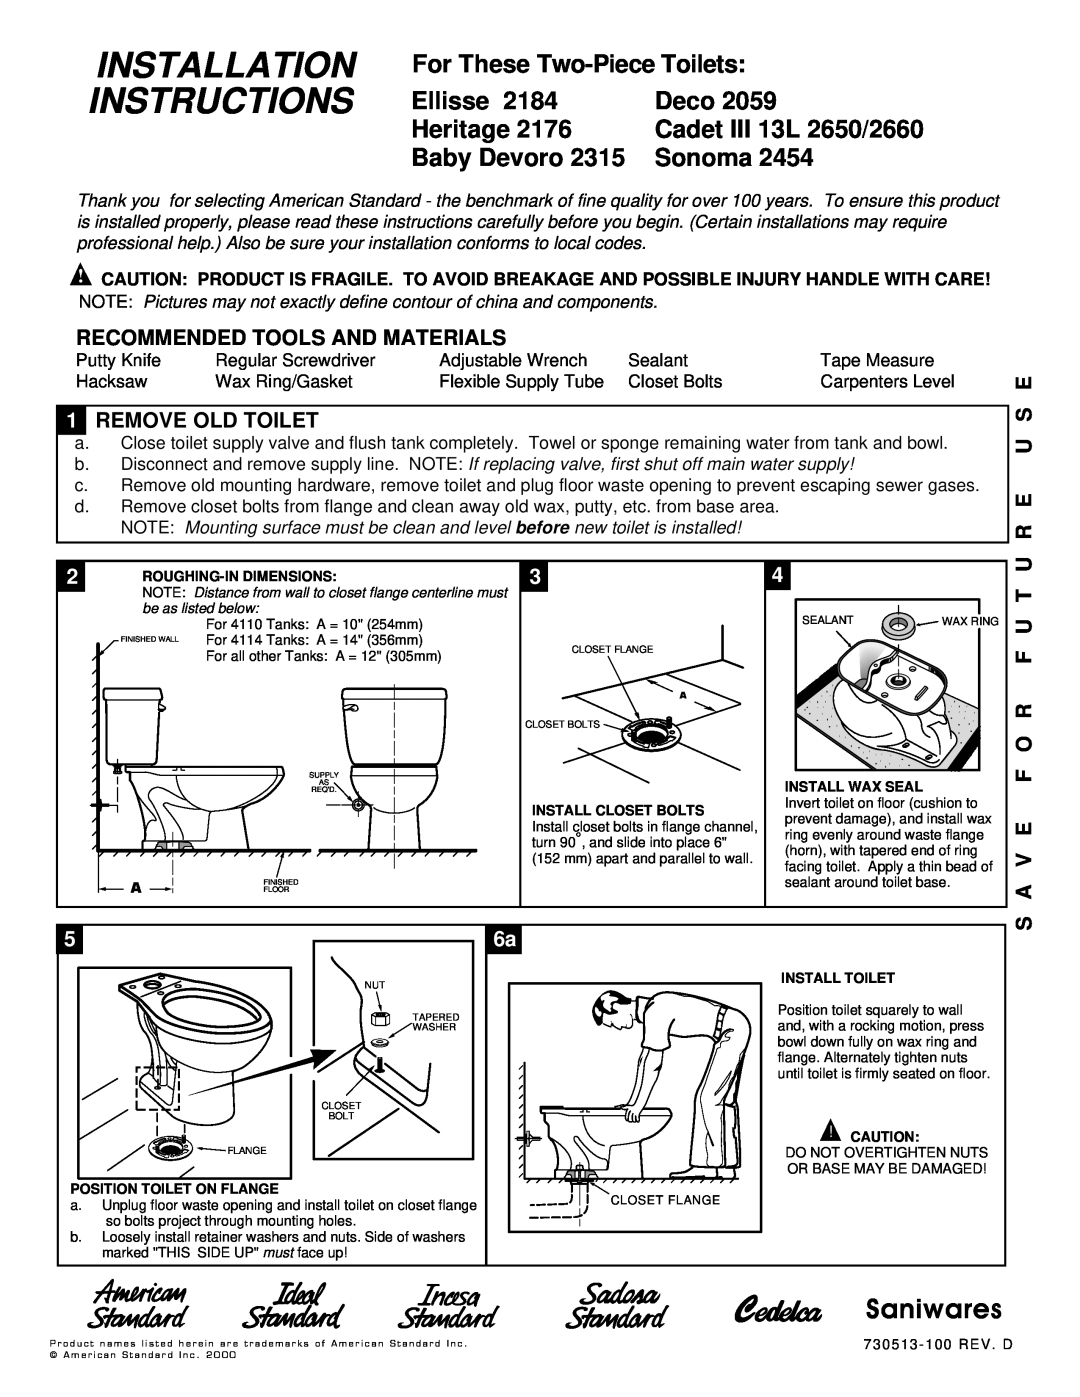 American Standard 2059 installation instructions Installation Instructions, Saniwares, For These Two-PieceToilets, Ellisse 